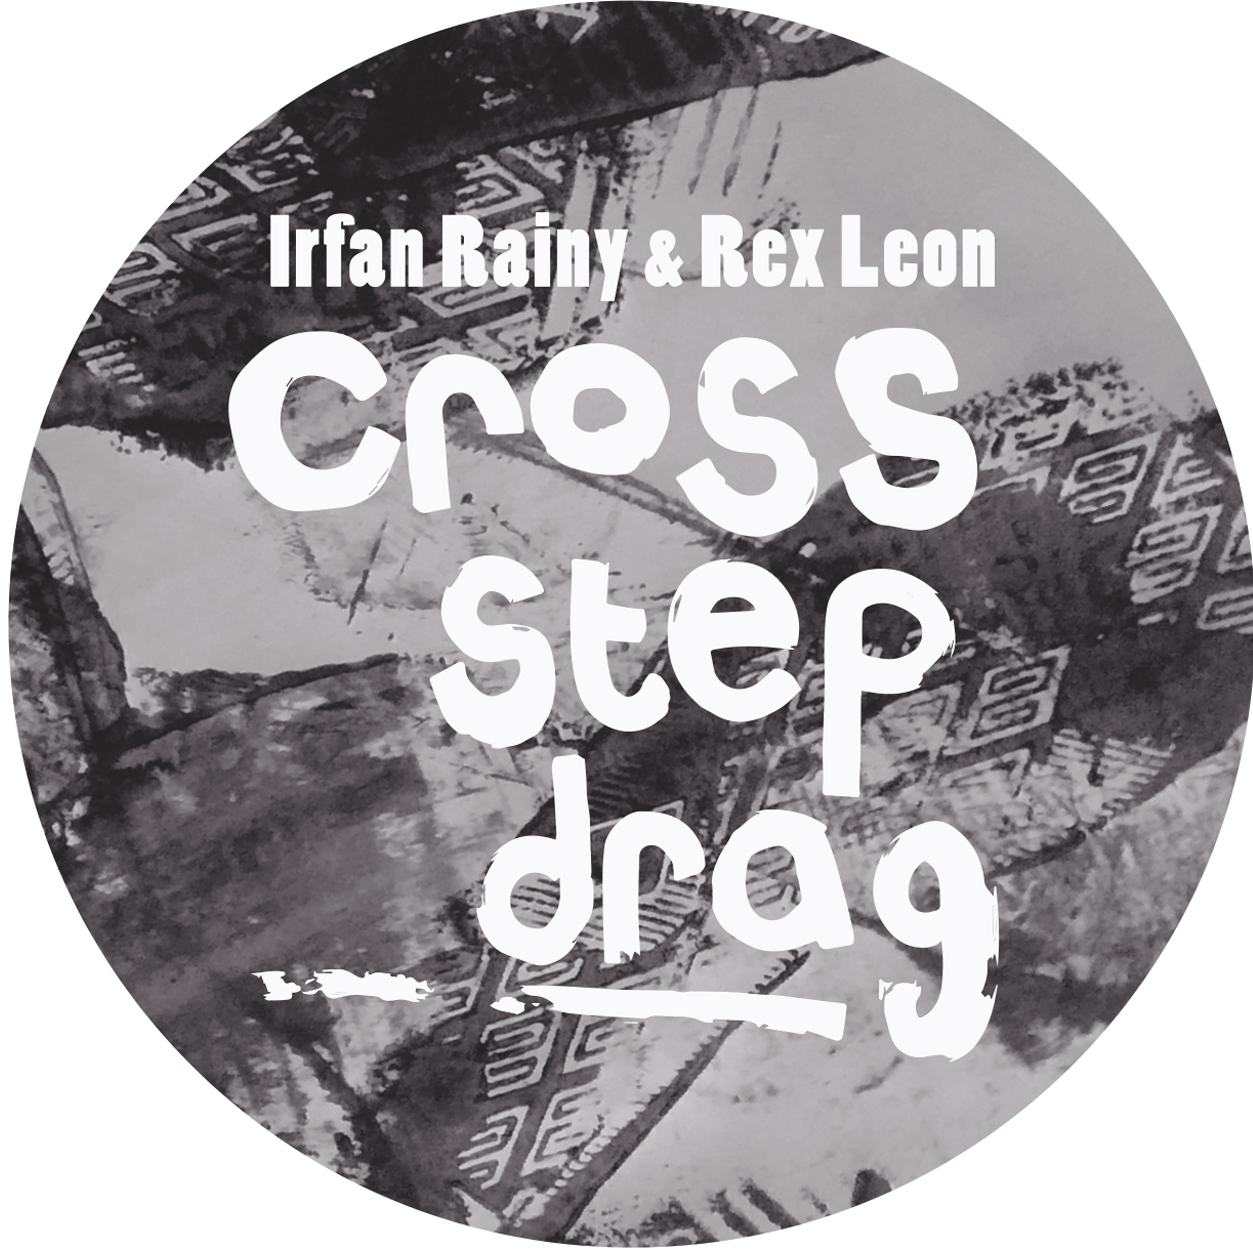 Irfan Rainy & Rex Leon/CROSS STEP.. 12"